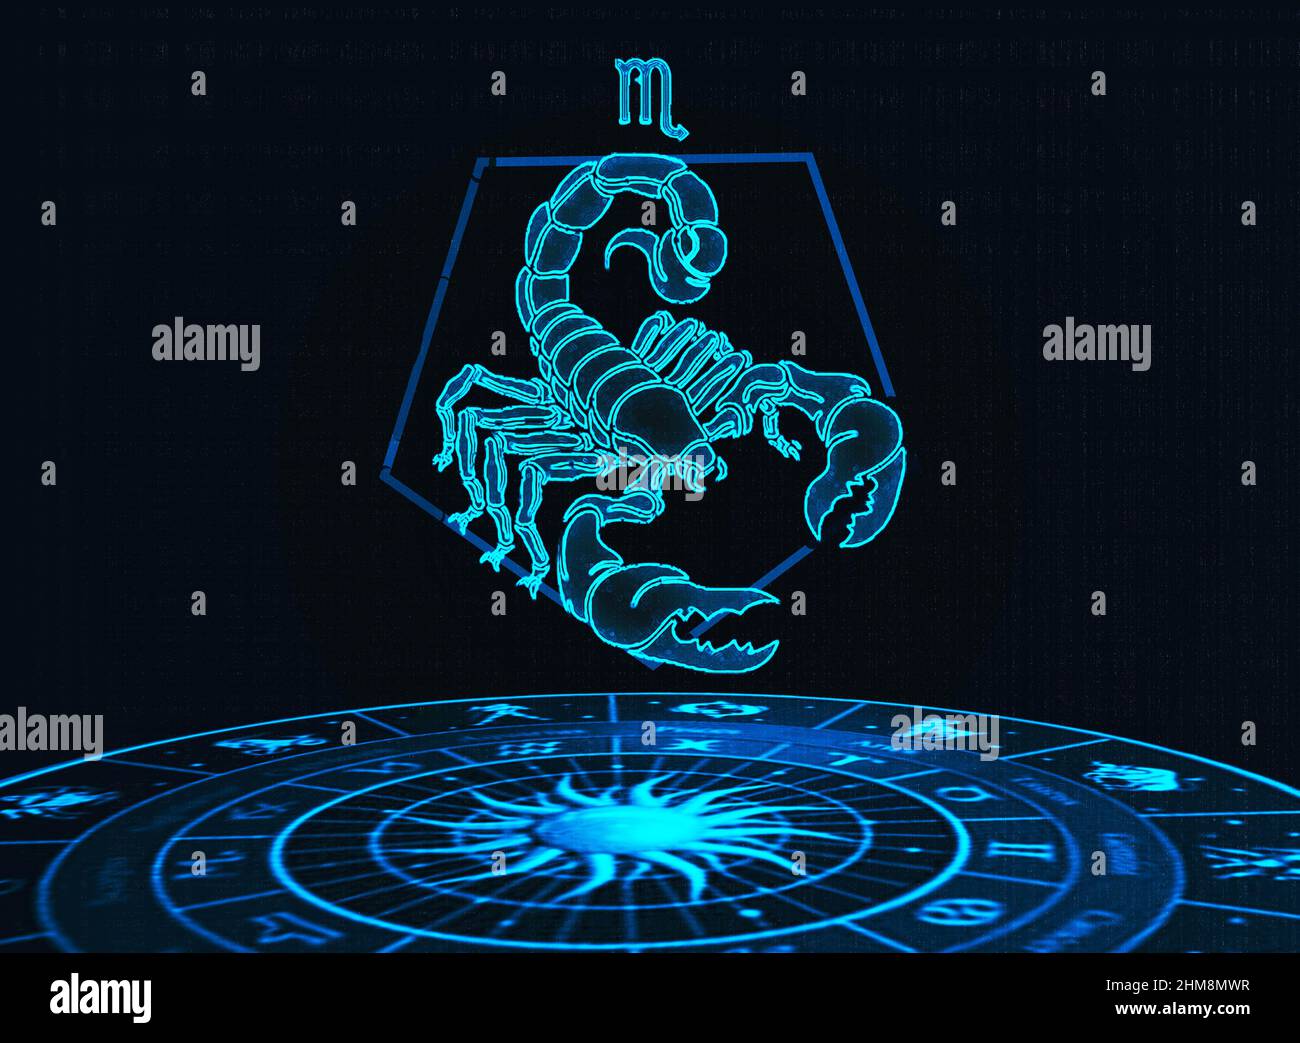 Scorpion Scorpio zodiac animal sign design graphic Stock Photo - Alamy